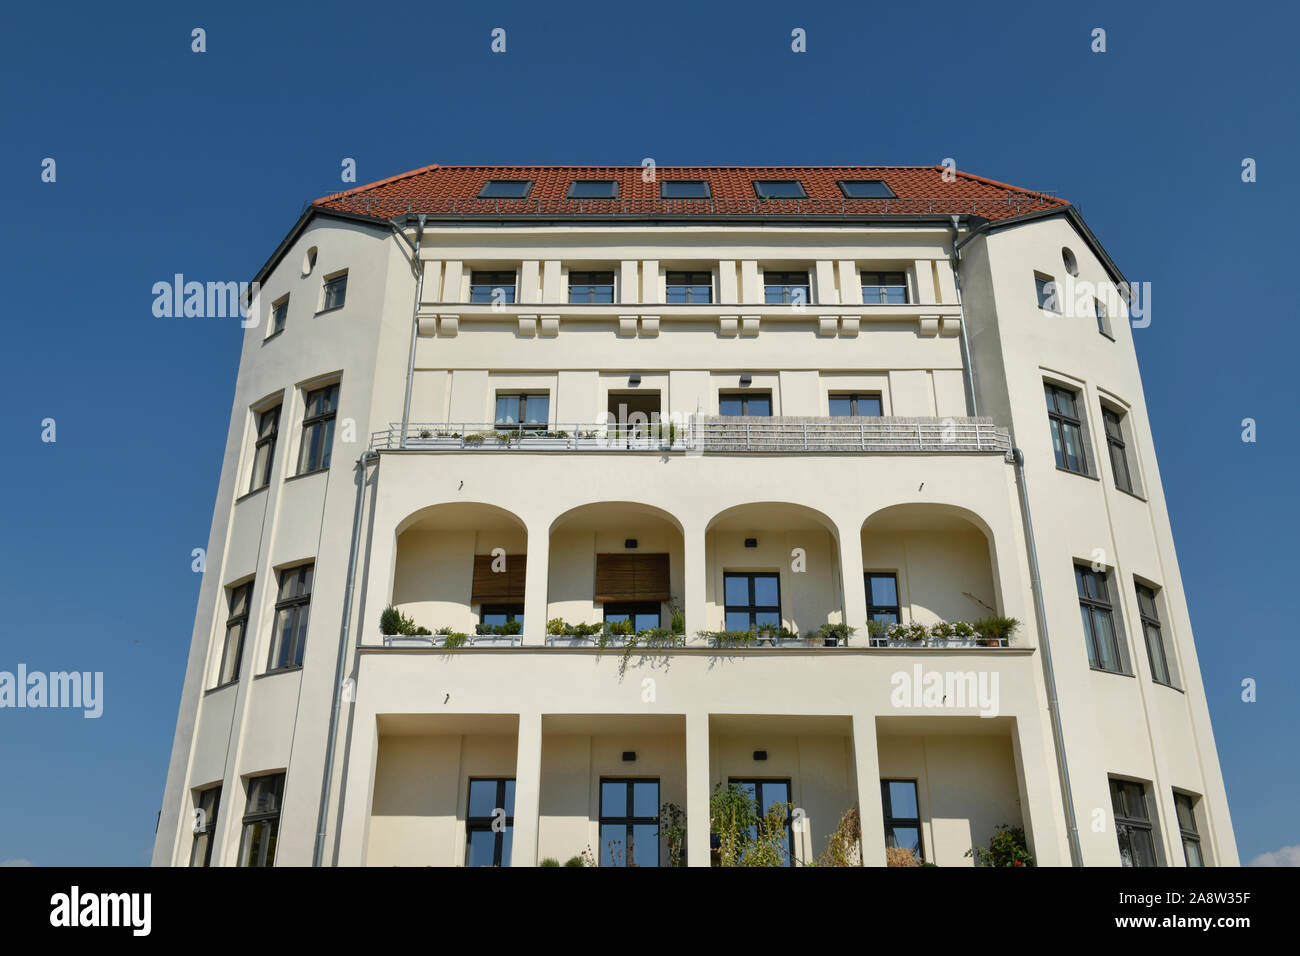 Wohnhaus, Caligariplatz, Weißensee, Pankow, Berlin, Deutschland Stock Photo